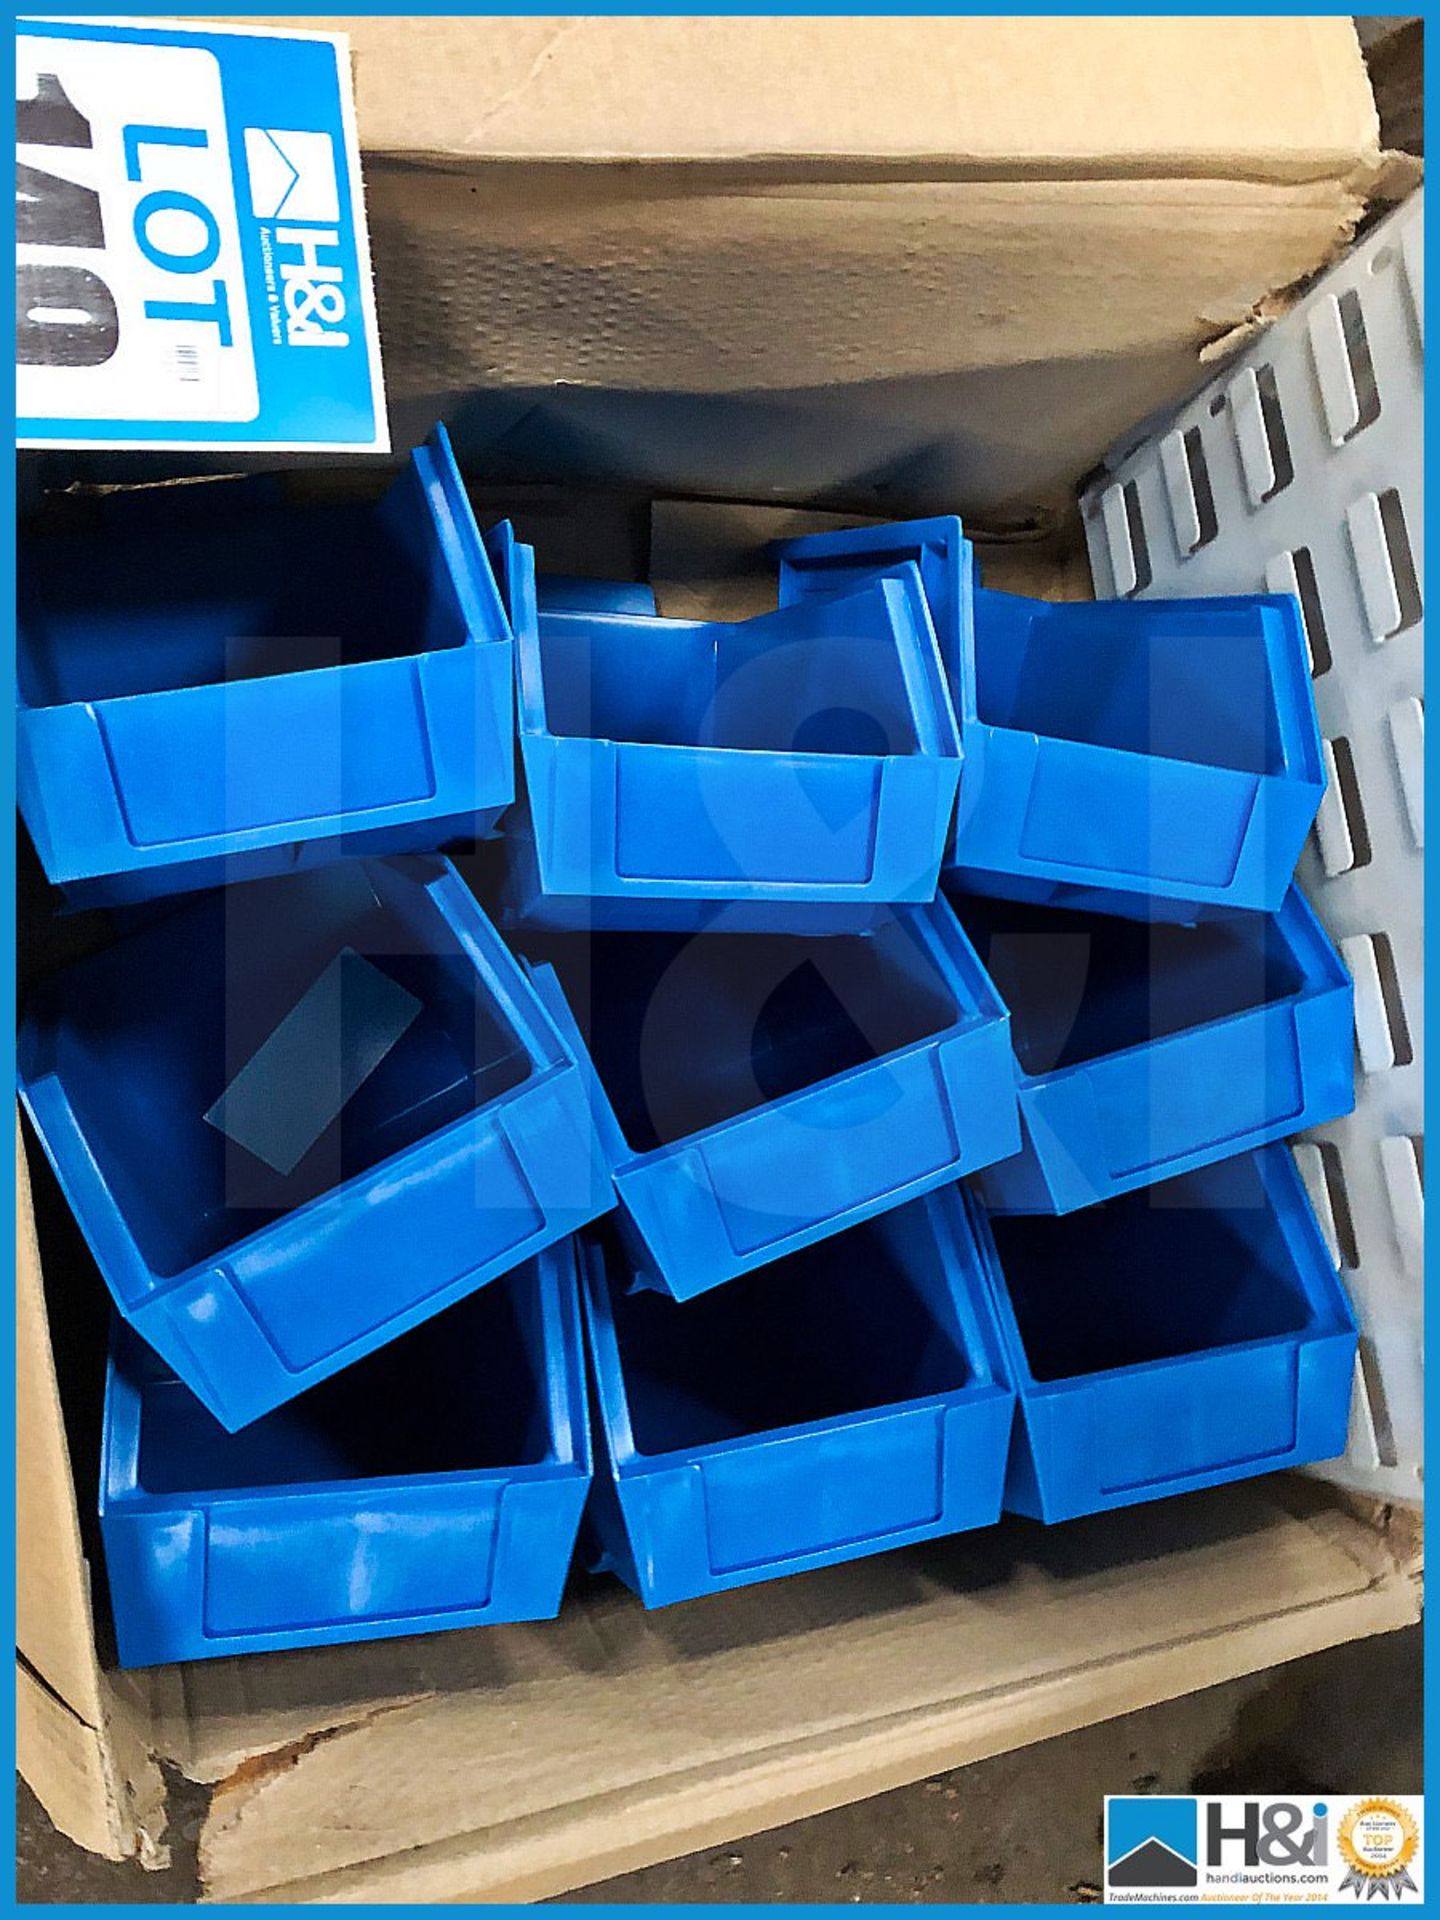 1 x new Metabin linbin storage bin set with 9 blue bins - Image 2 of 2